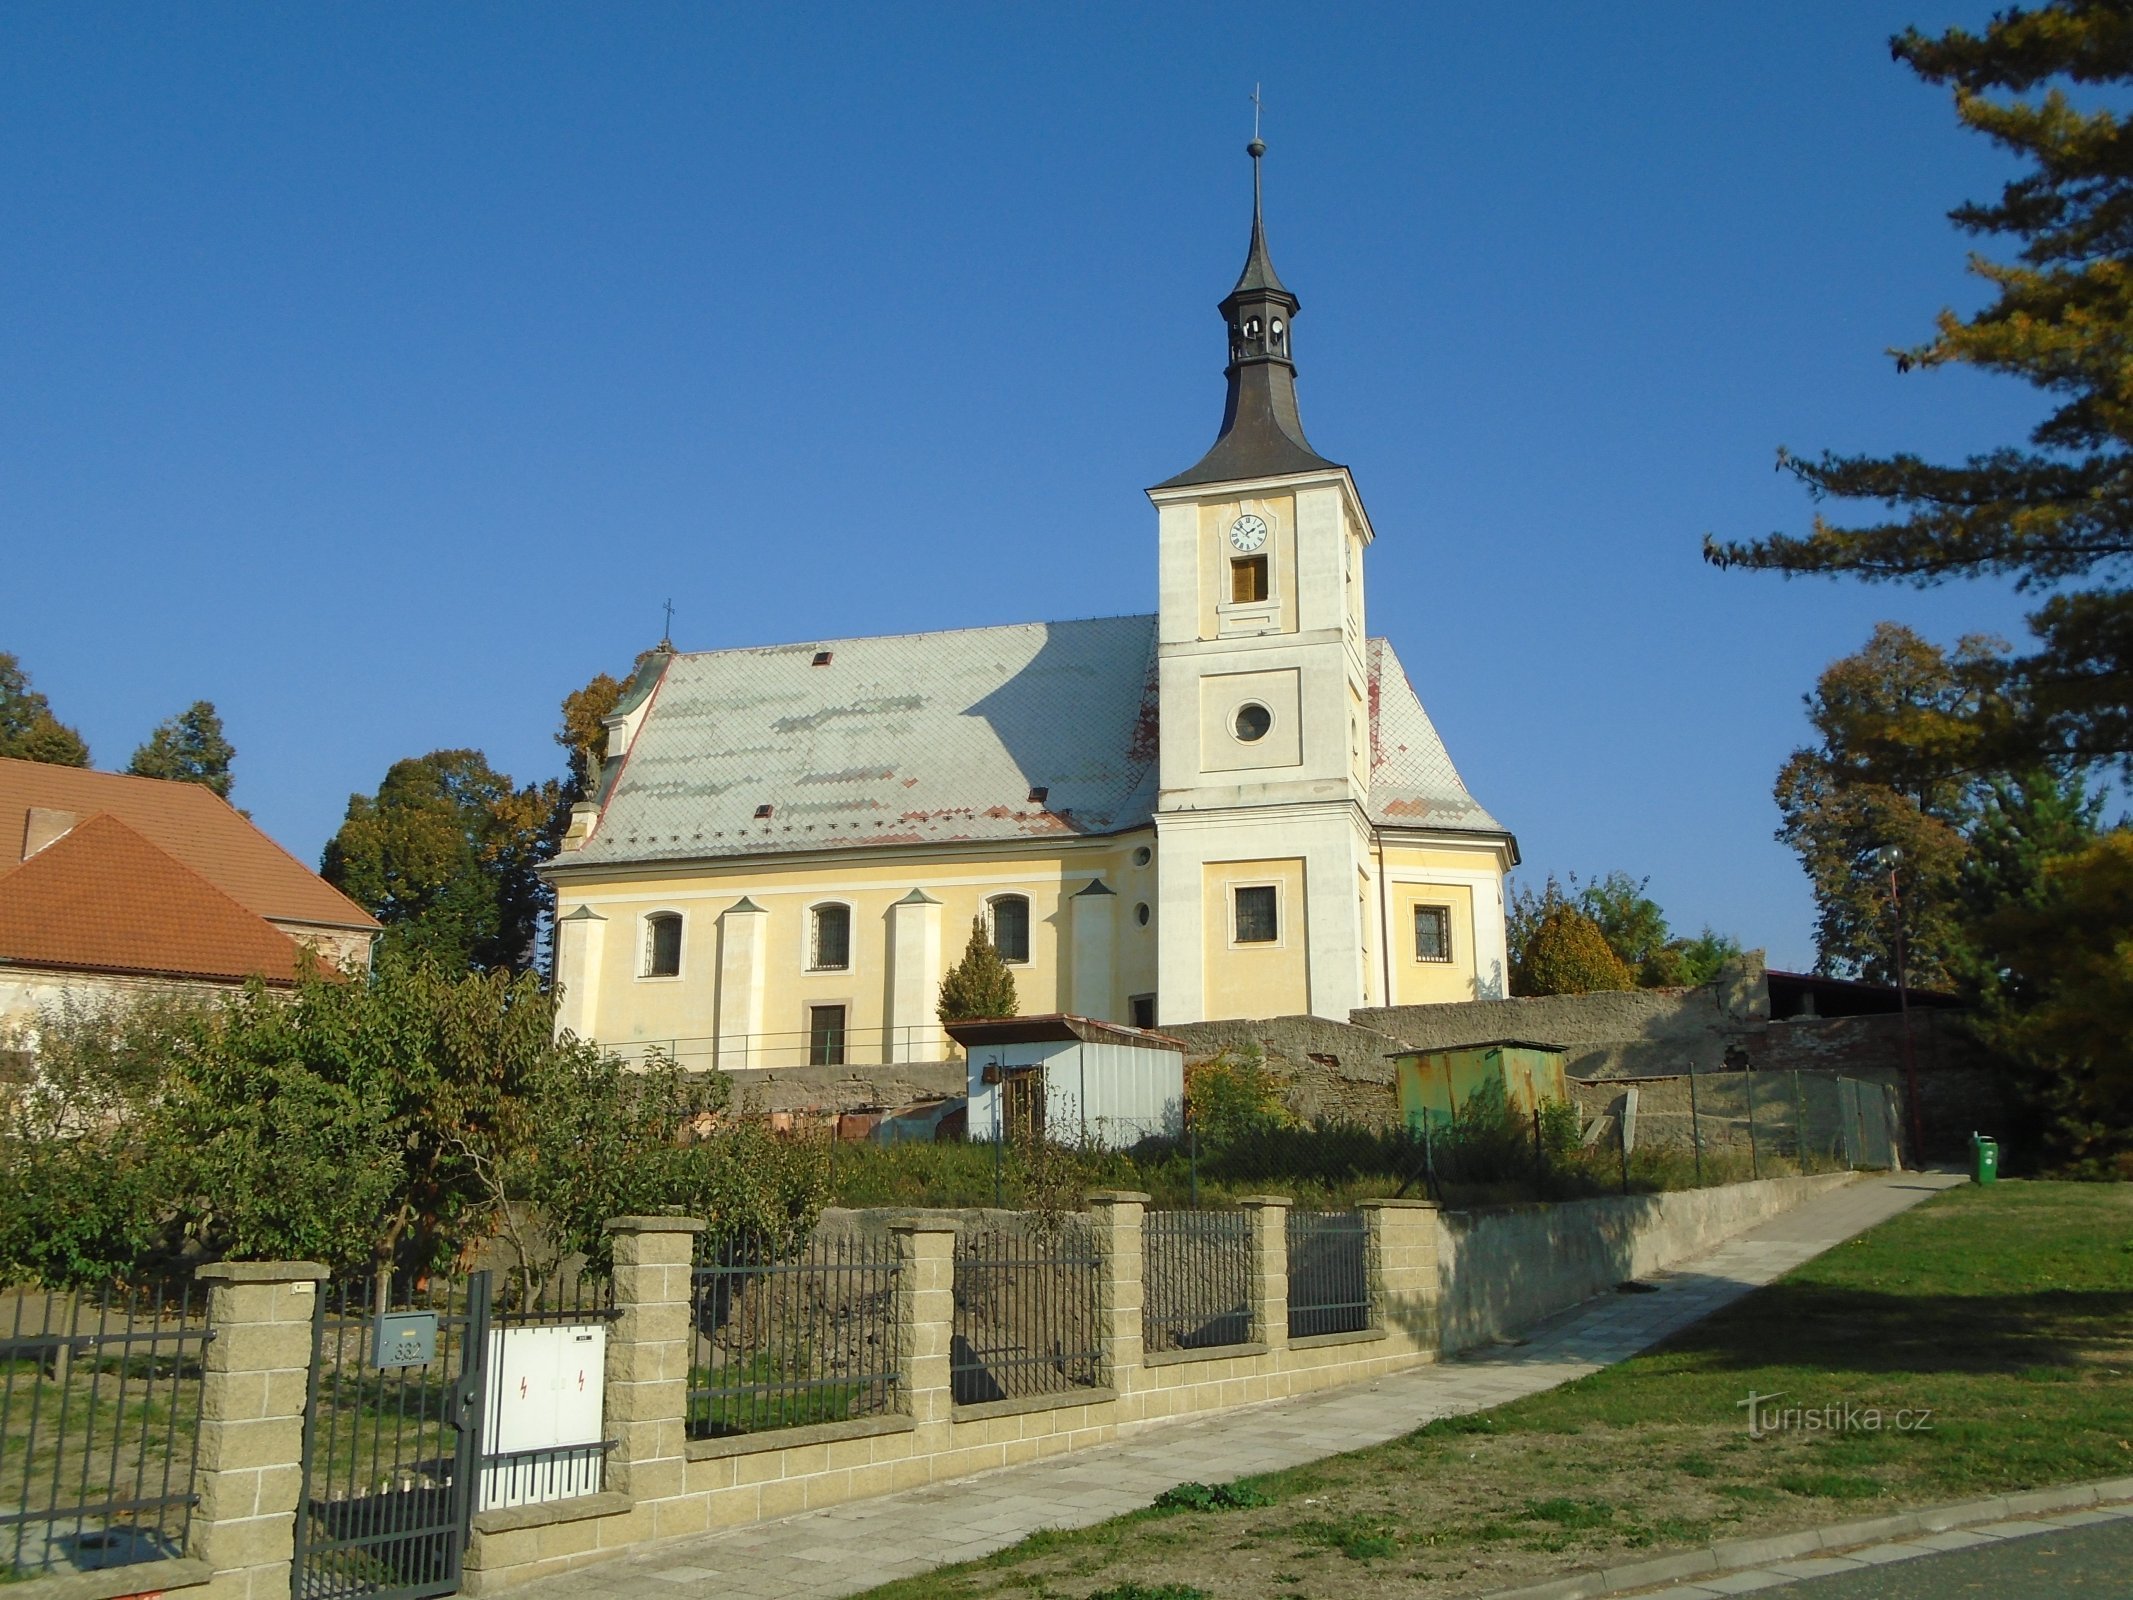 Cerkev sv. Janez Krstnik (Holohlavy, 10.10.2018)